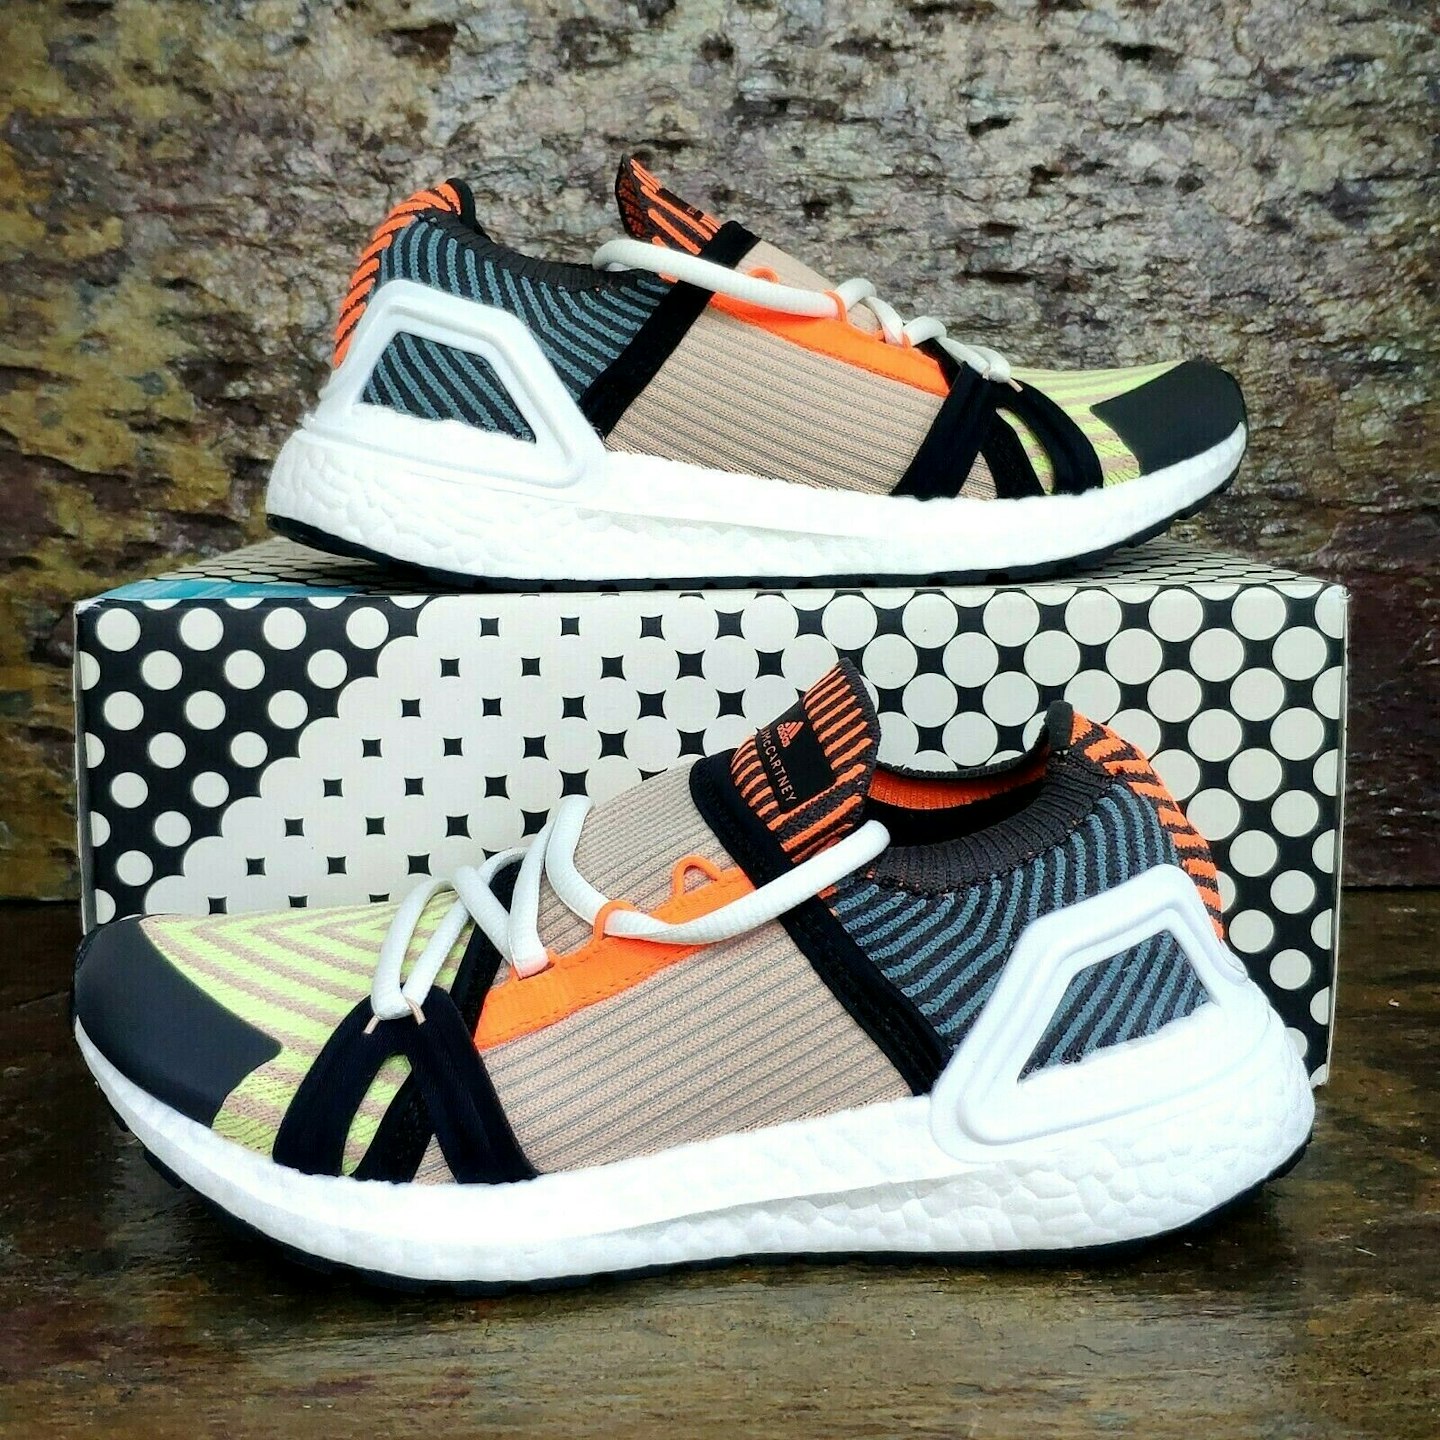 Adidas by Stella McCartney, UltraBoost Trainers, £100